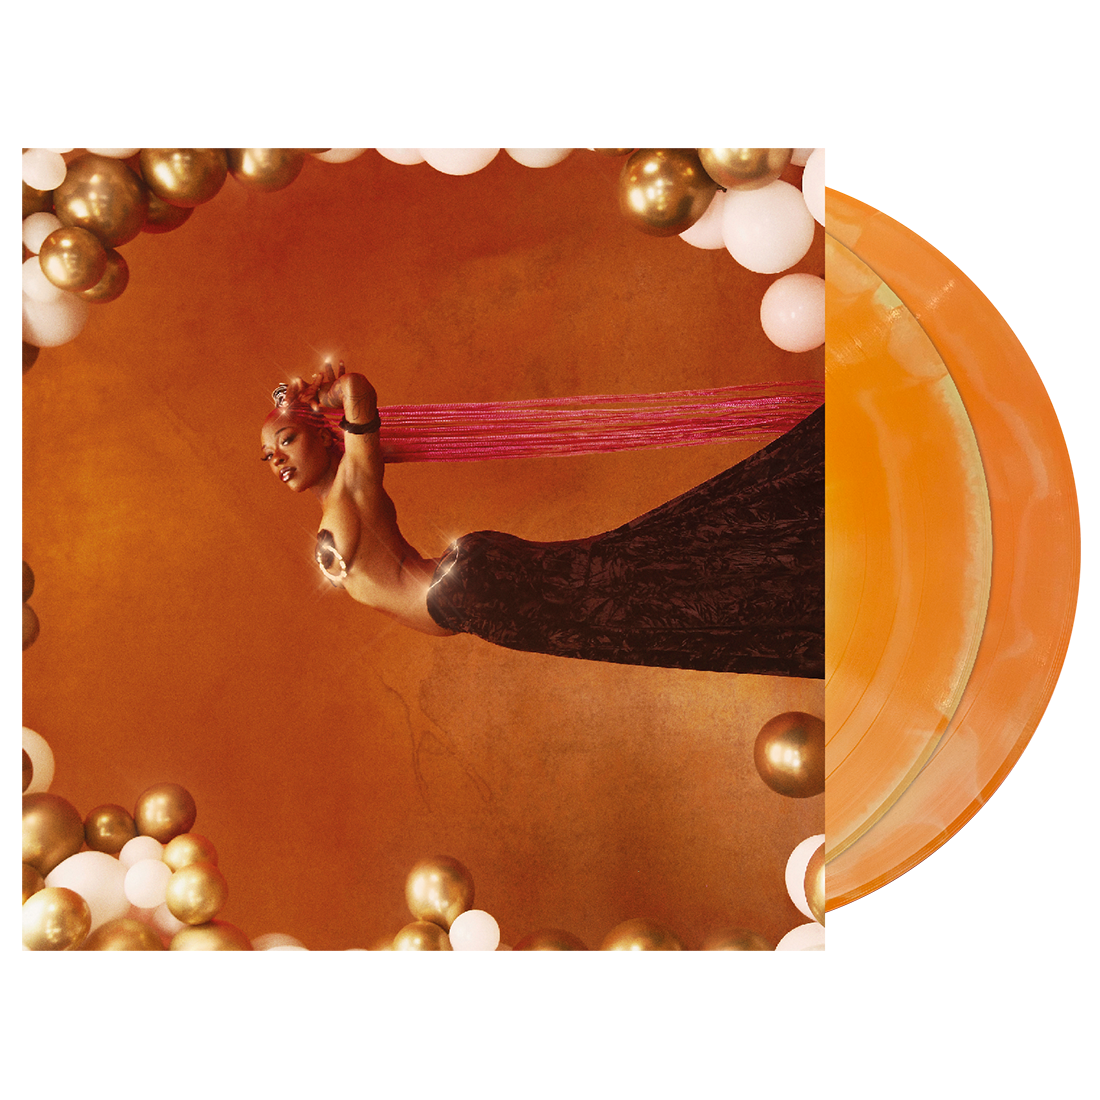 Sudan Archives - Natural Brown Prom Queen: Limited Orange Dream Vinyl 2LP